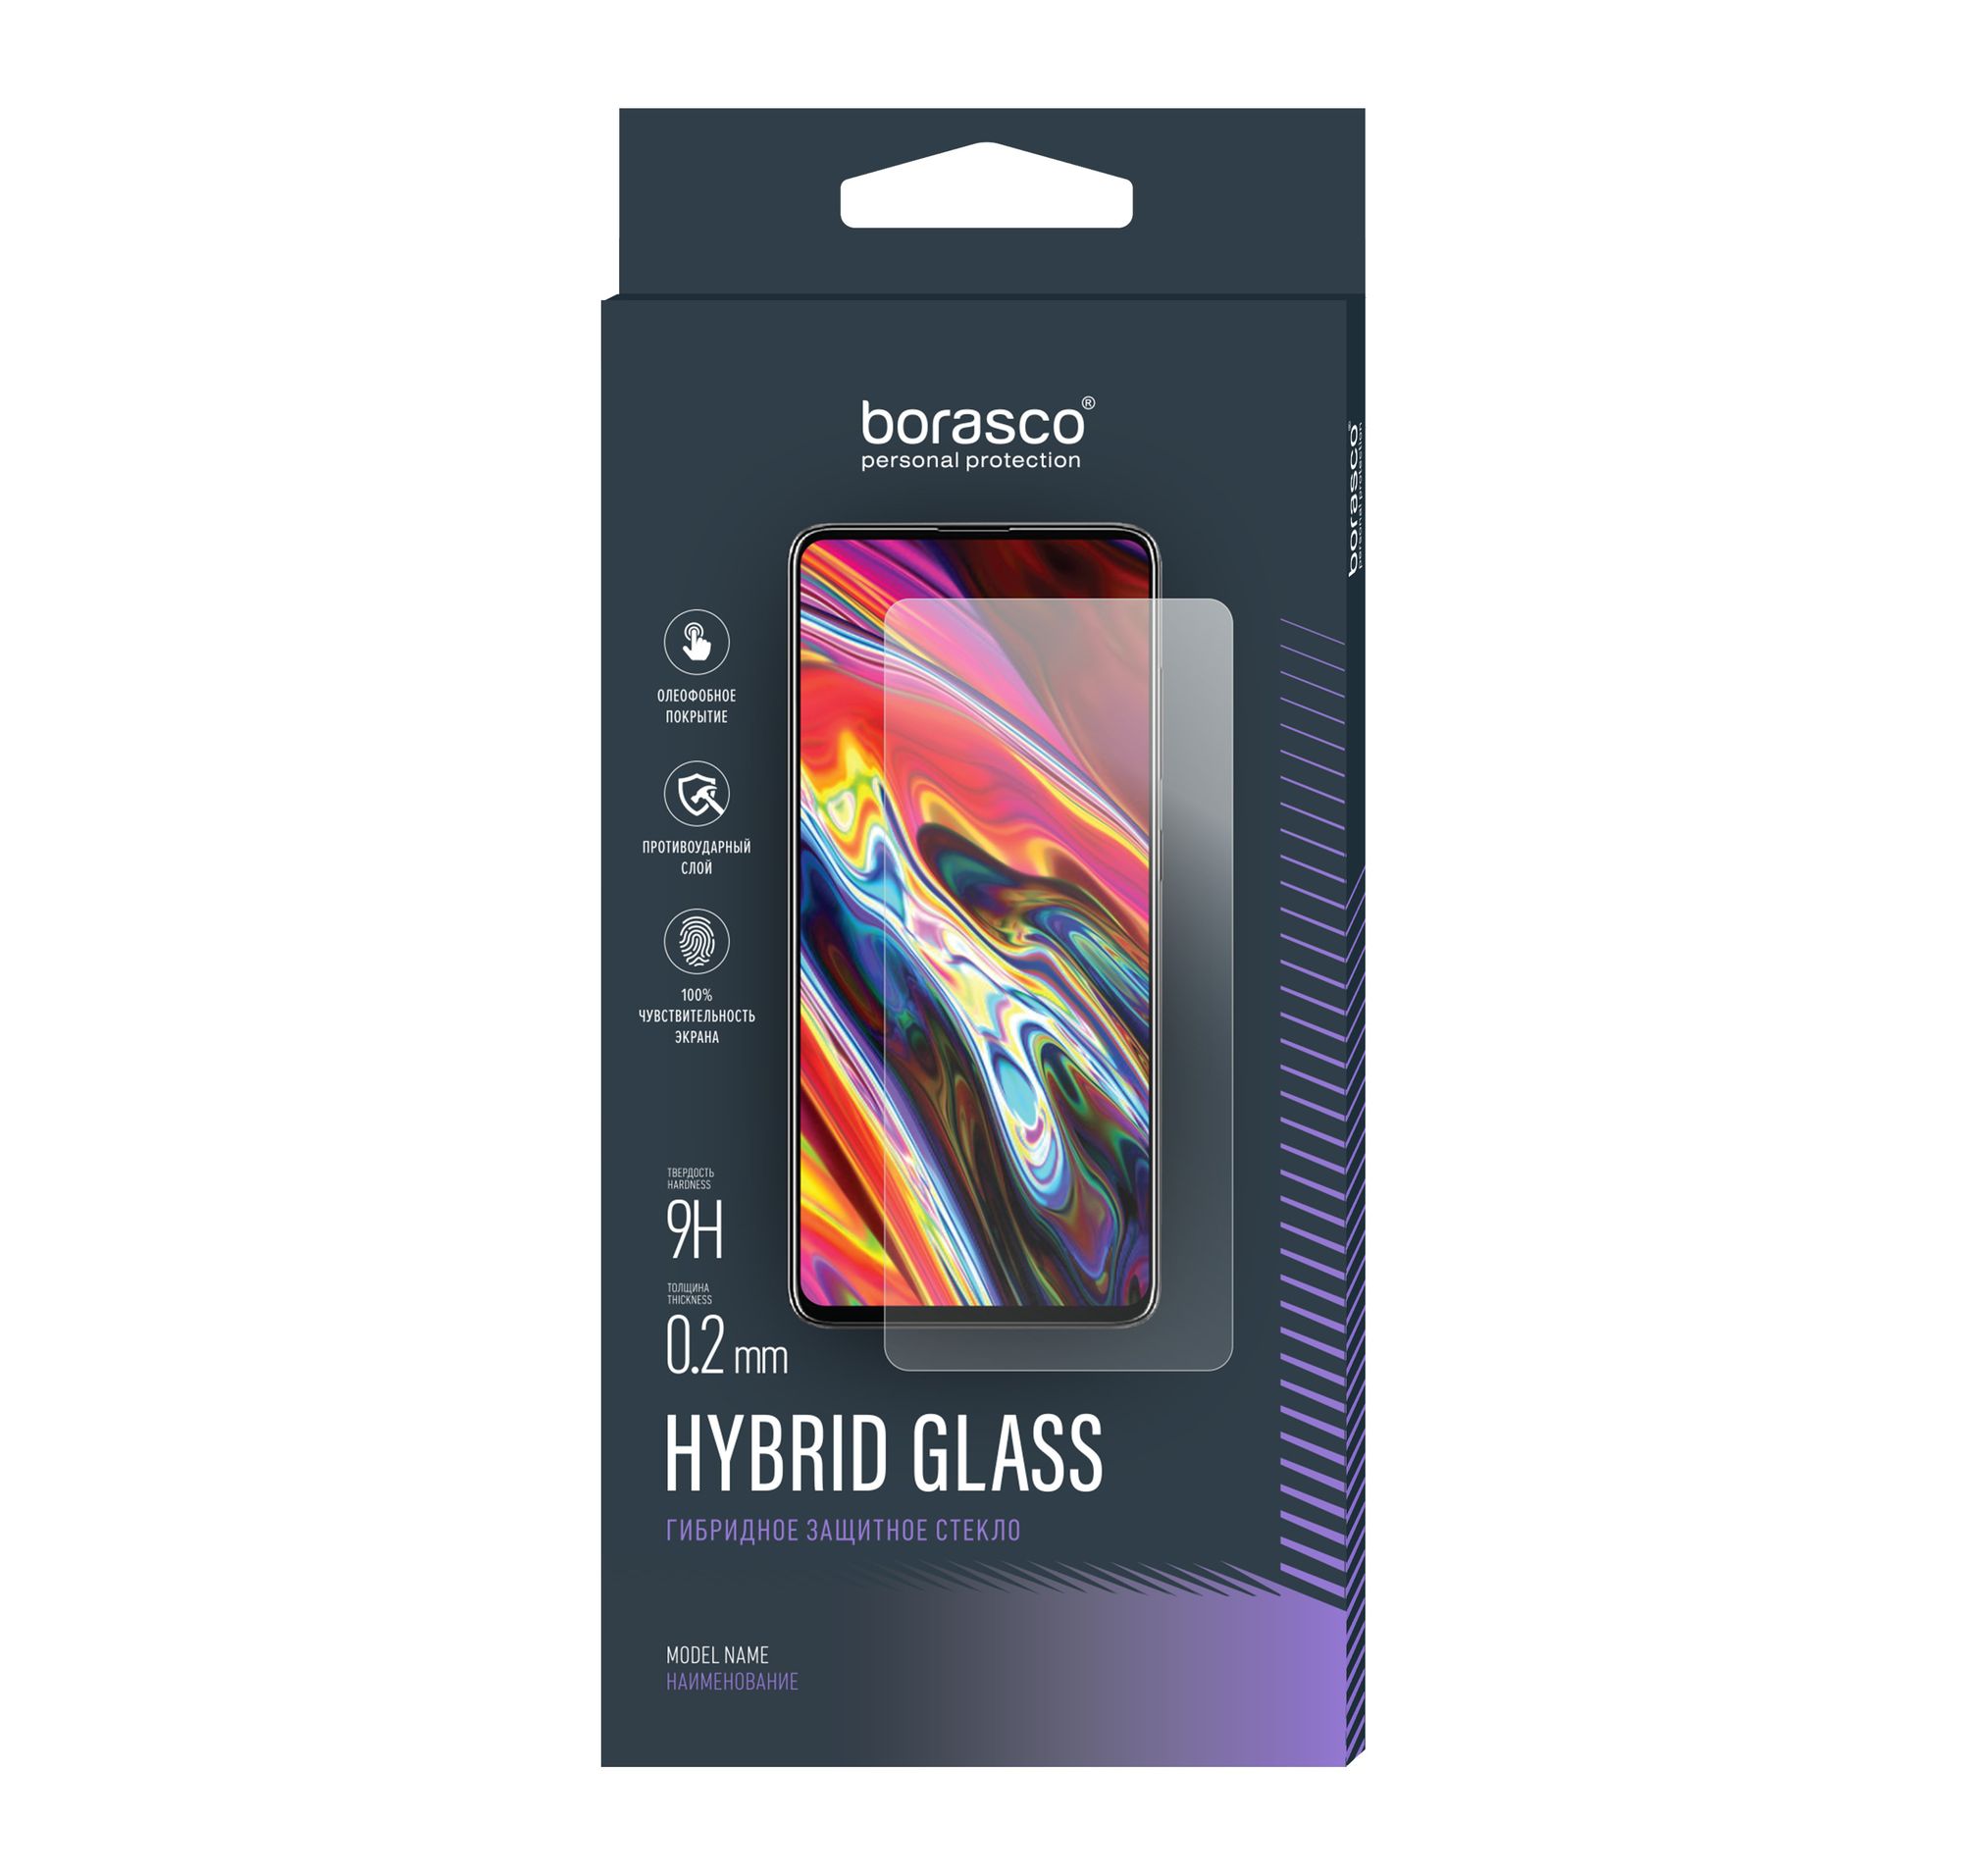 Стекло защитное Hybrid Glass VSP 0,26 мм для Sony Xperia Z4 Tablet LT 2 шт закаленное защитное стекло для смартфонов sony xperia z5 premium z4 z3 plus z2 компактная защита экрана для sony z1 z